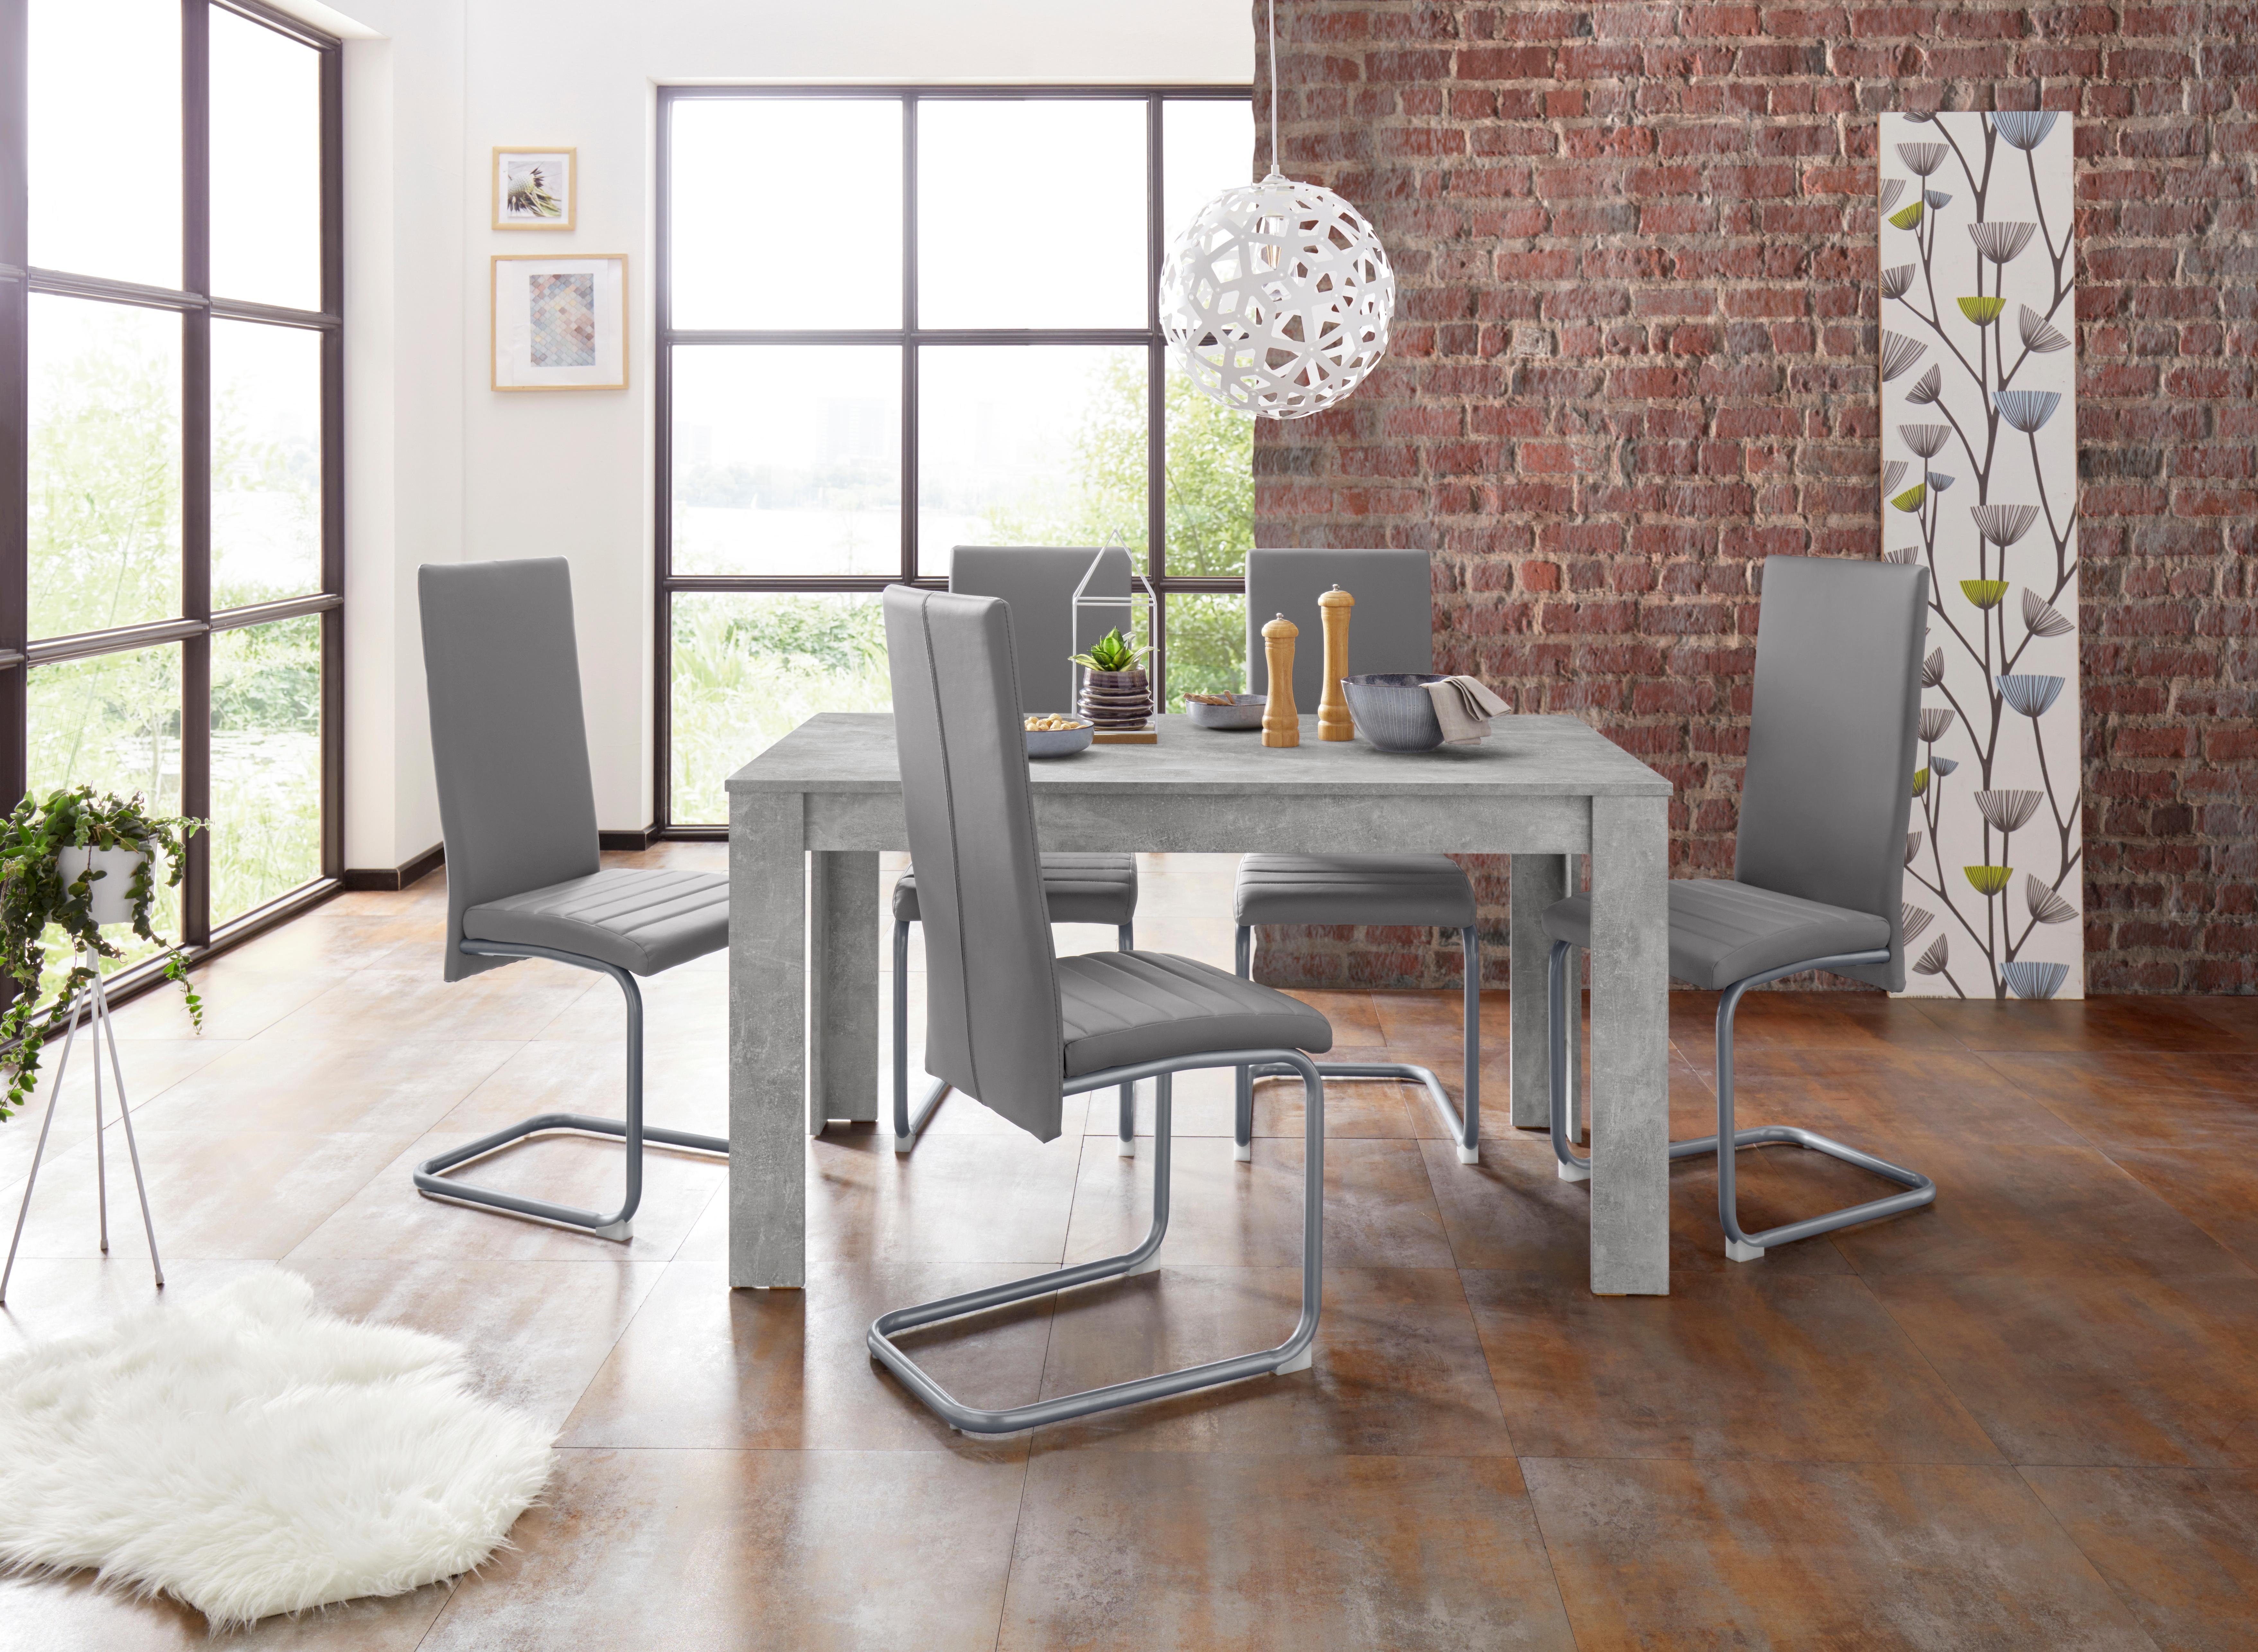 homexperts eethoek nitro tafel - breedte 140 cm + 6 stoelen (set, 7-delig) grijs